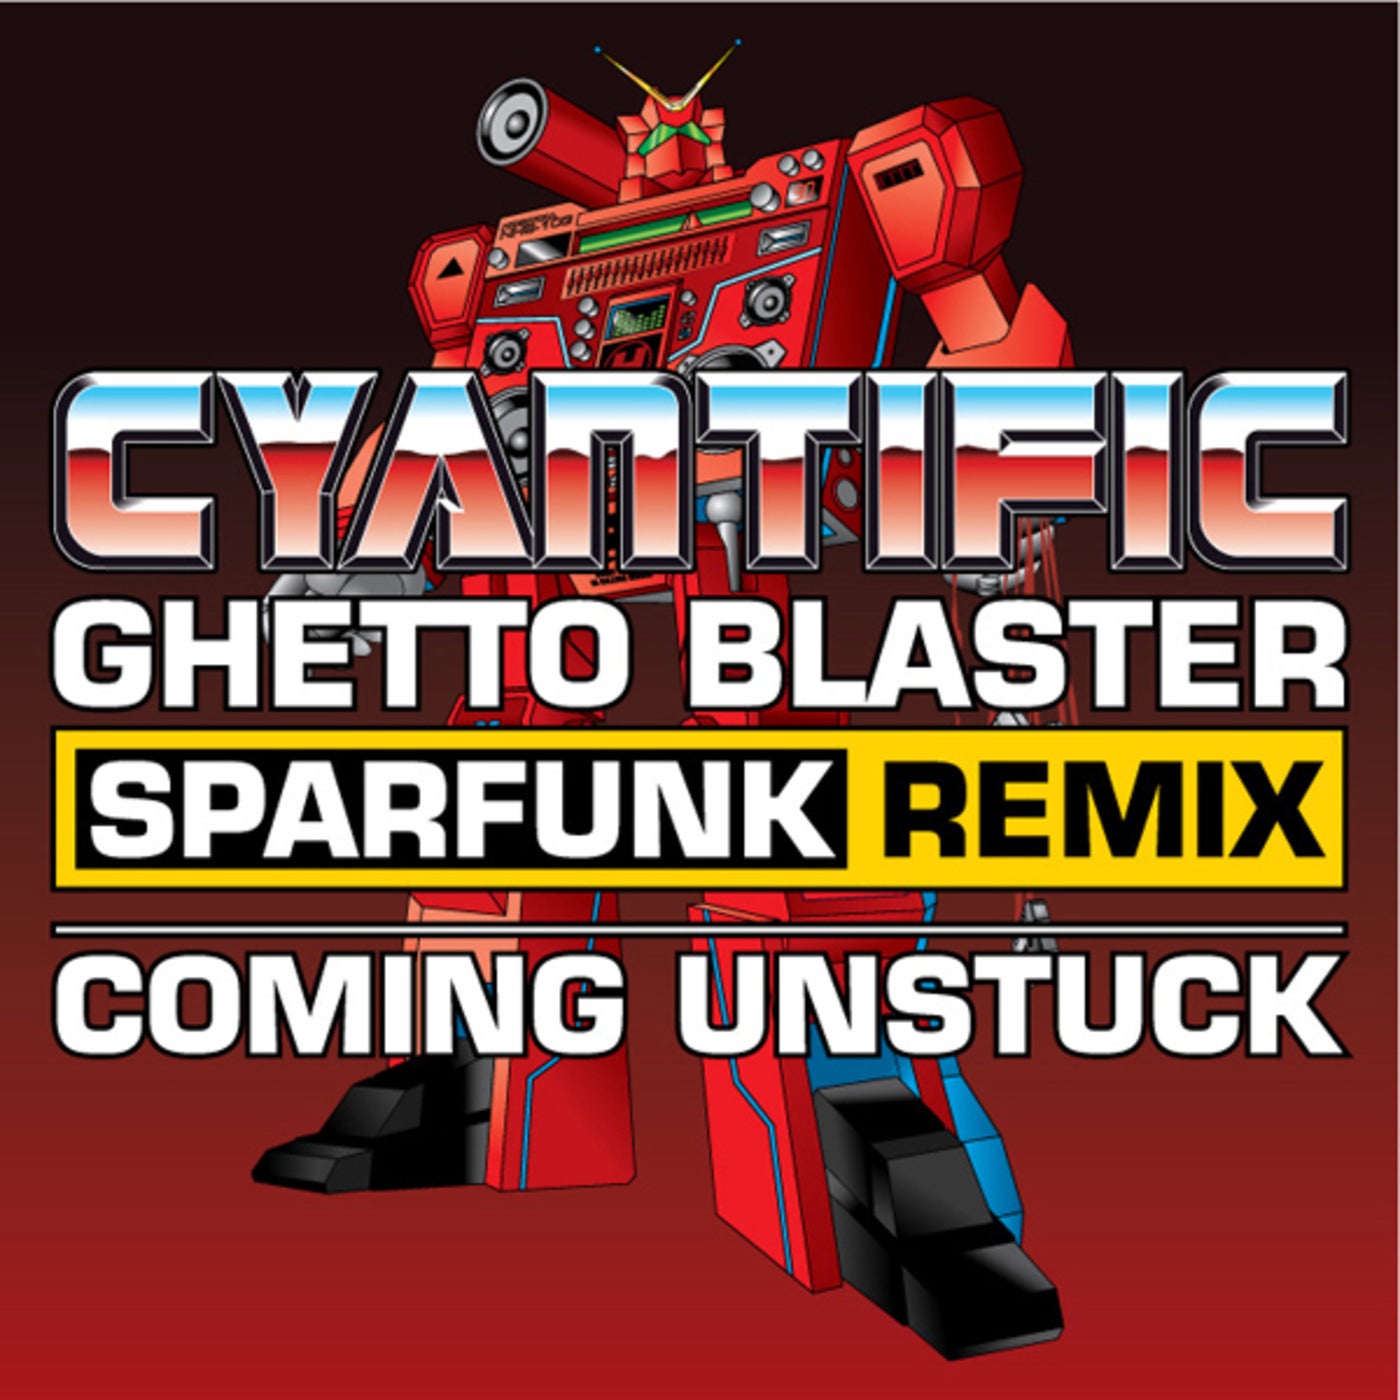 Ghetto Blaster remix